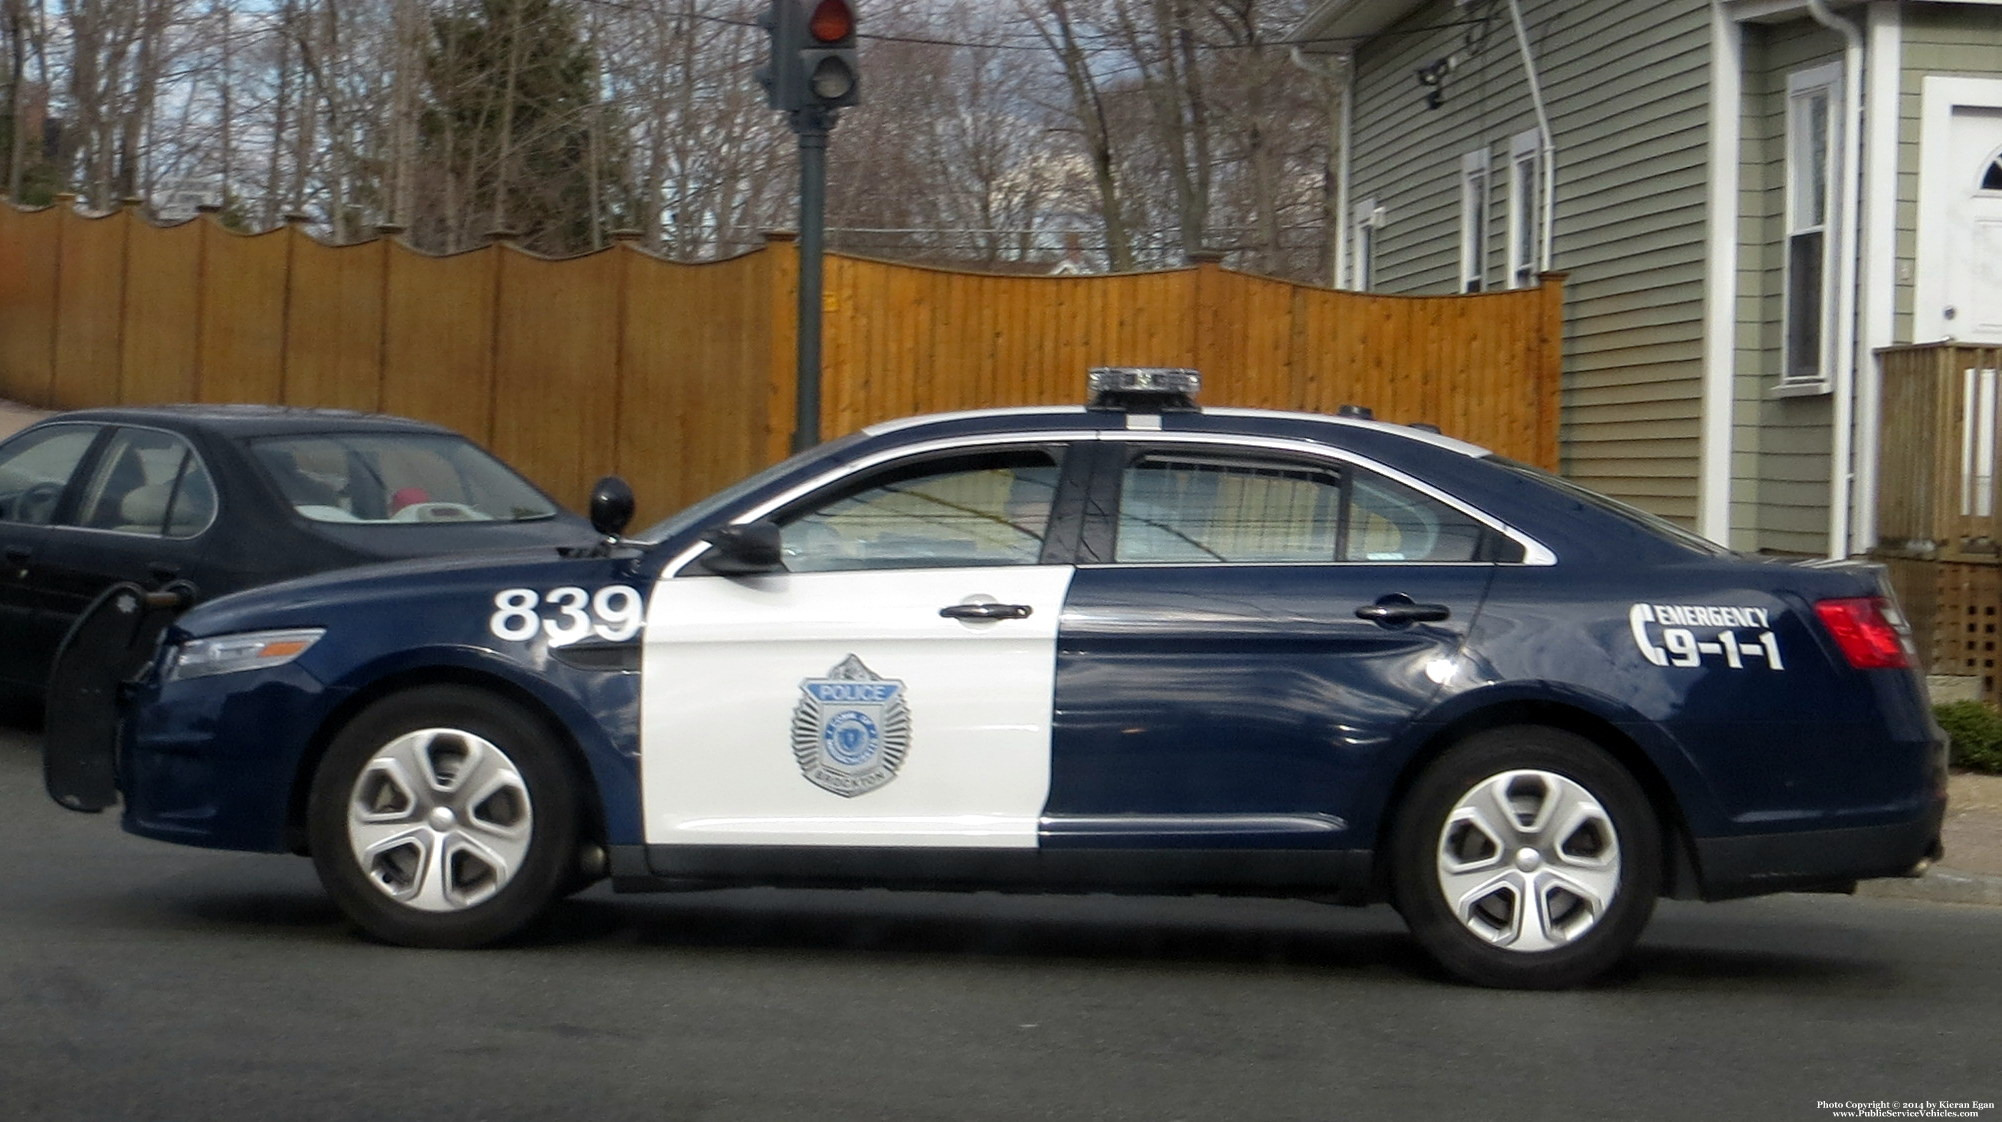 A photo  of Brockton Police
            Cruiser 839, a 2013-2014 Ford Police Interceptor Sedan             taken by Kieran Egan